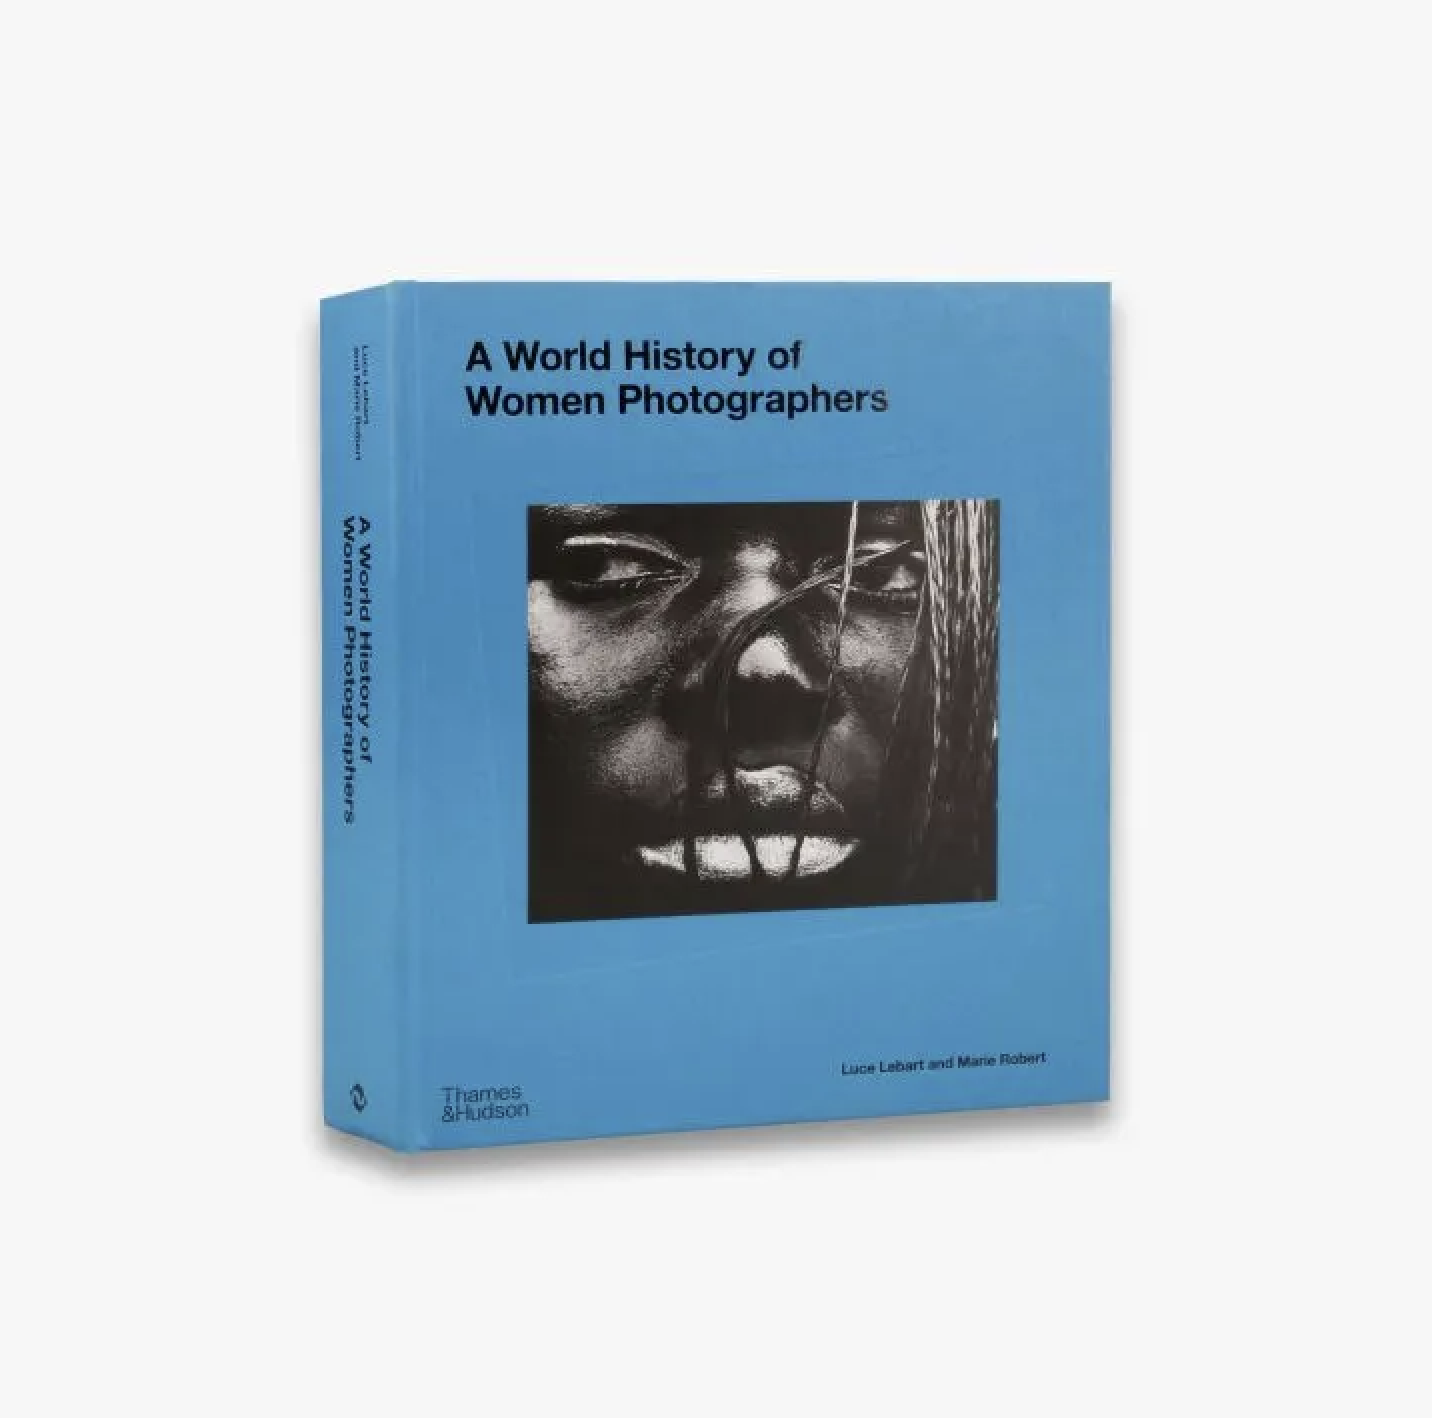 A World History of Women Photographers English version ((co-author，publication) 《世界女性摄影师史》（合著出版物）